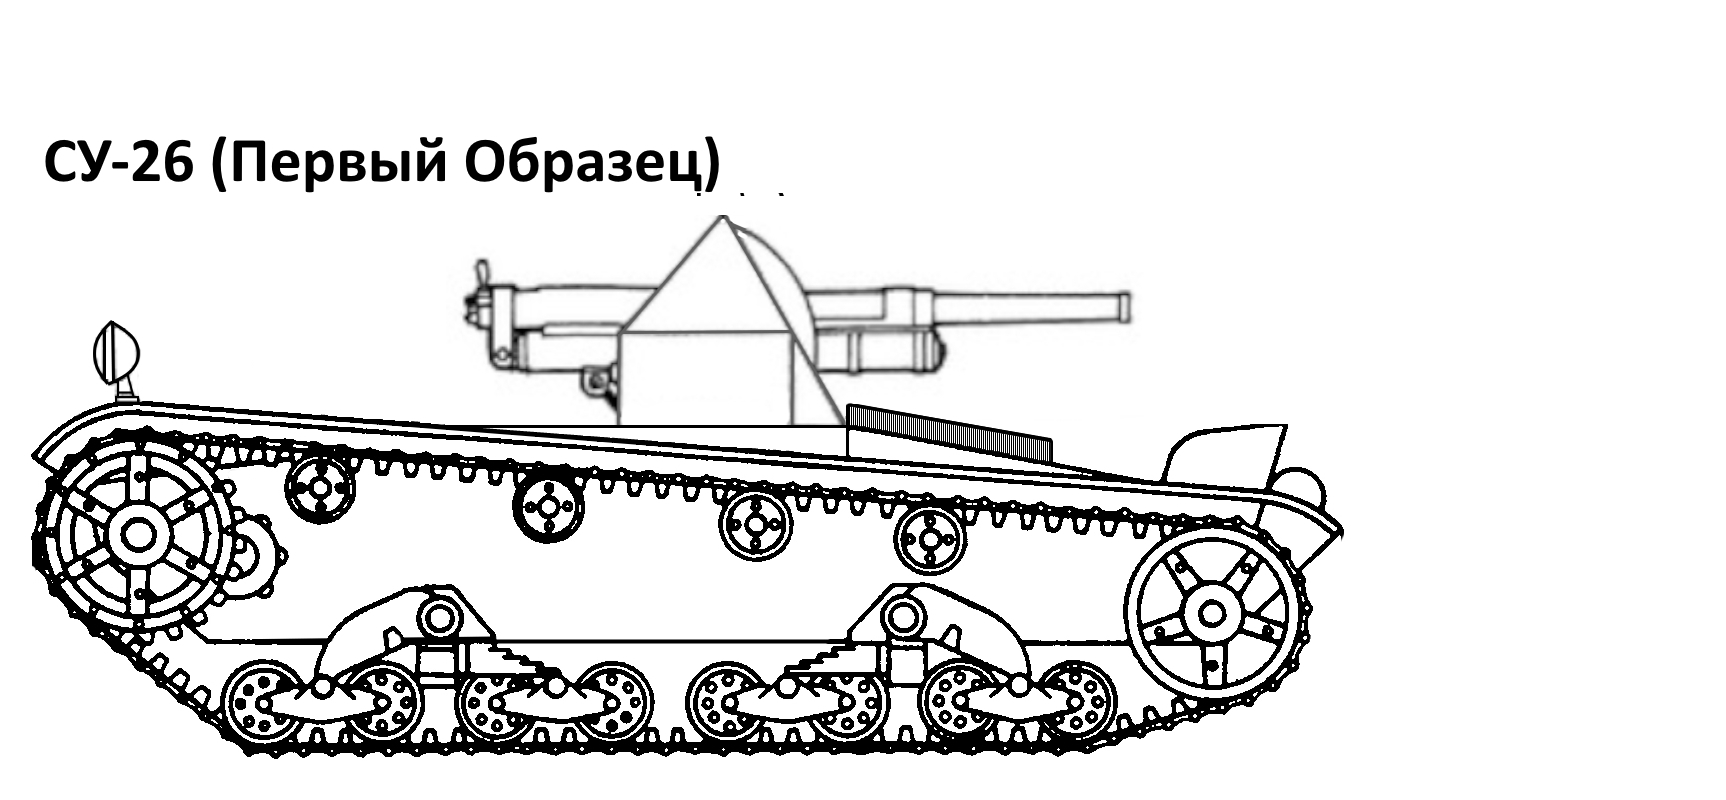 Противотанковый эрзац на базе Т-26 (Отредактированая)